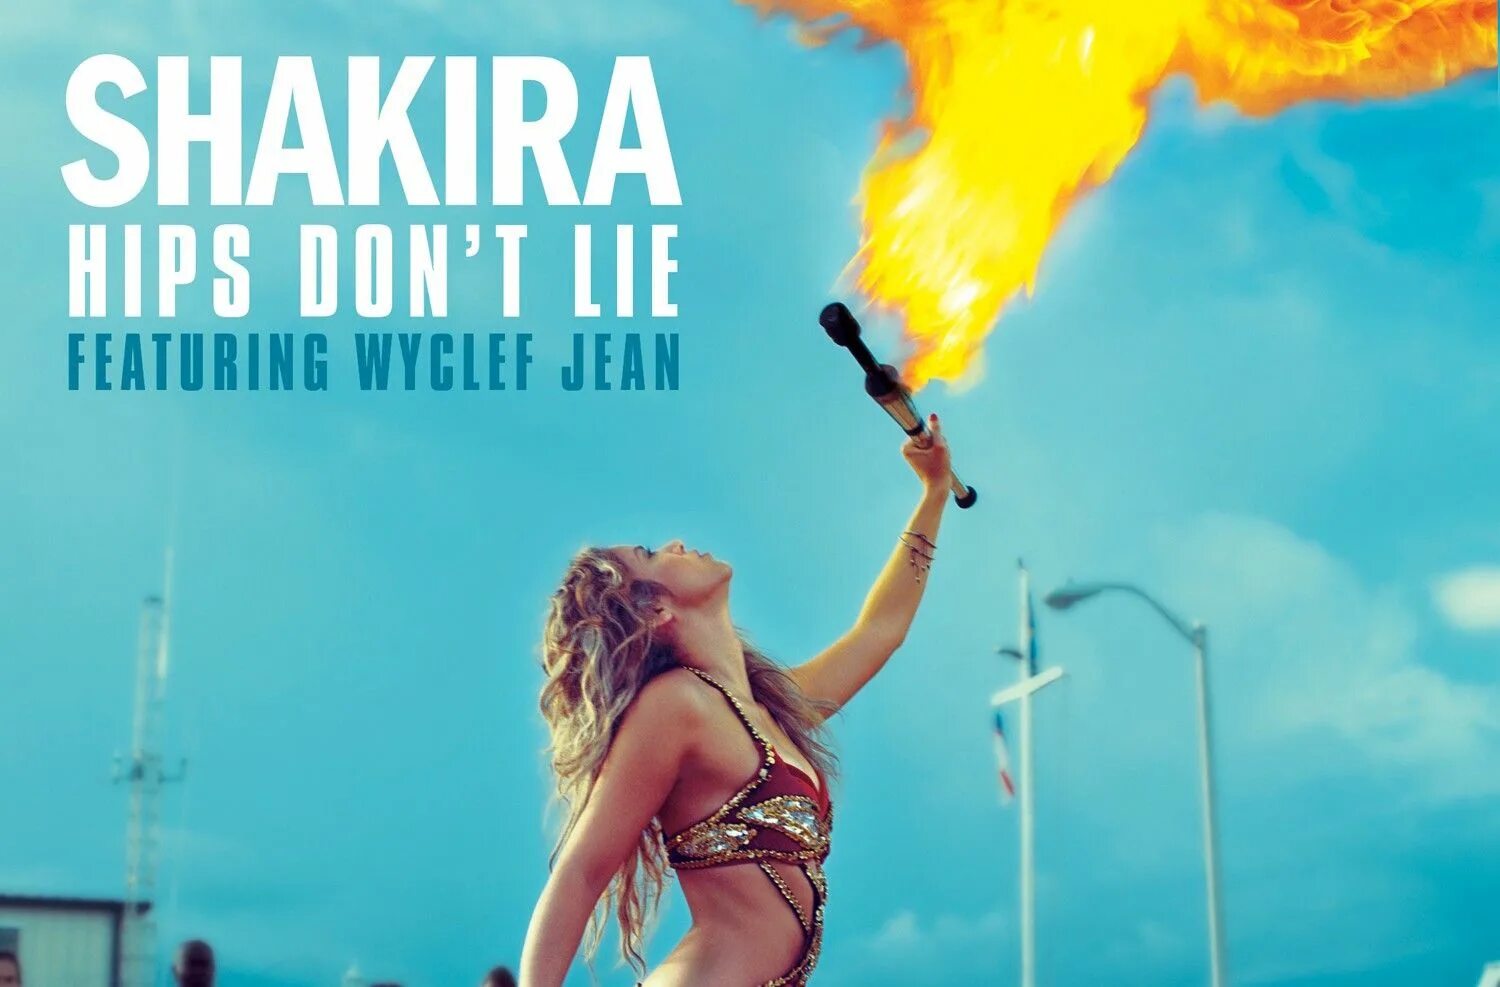 Dont feat. Shakira Wyclef Jean. Shakira Hips don't Lie. Shakira, Wyclef Jean - Hips don't Lie.